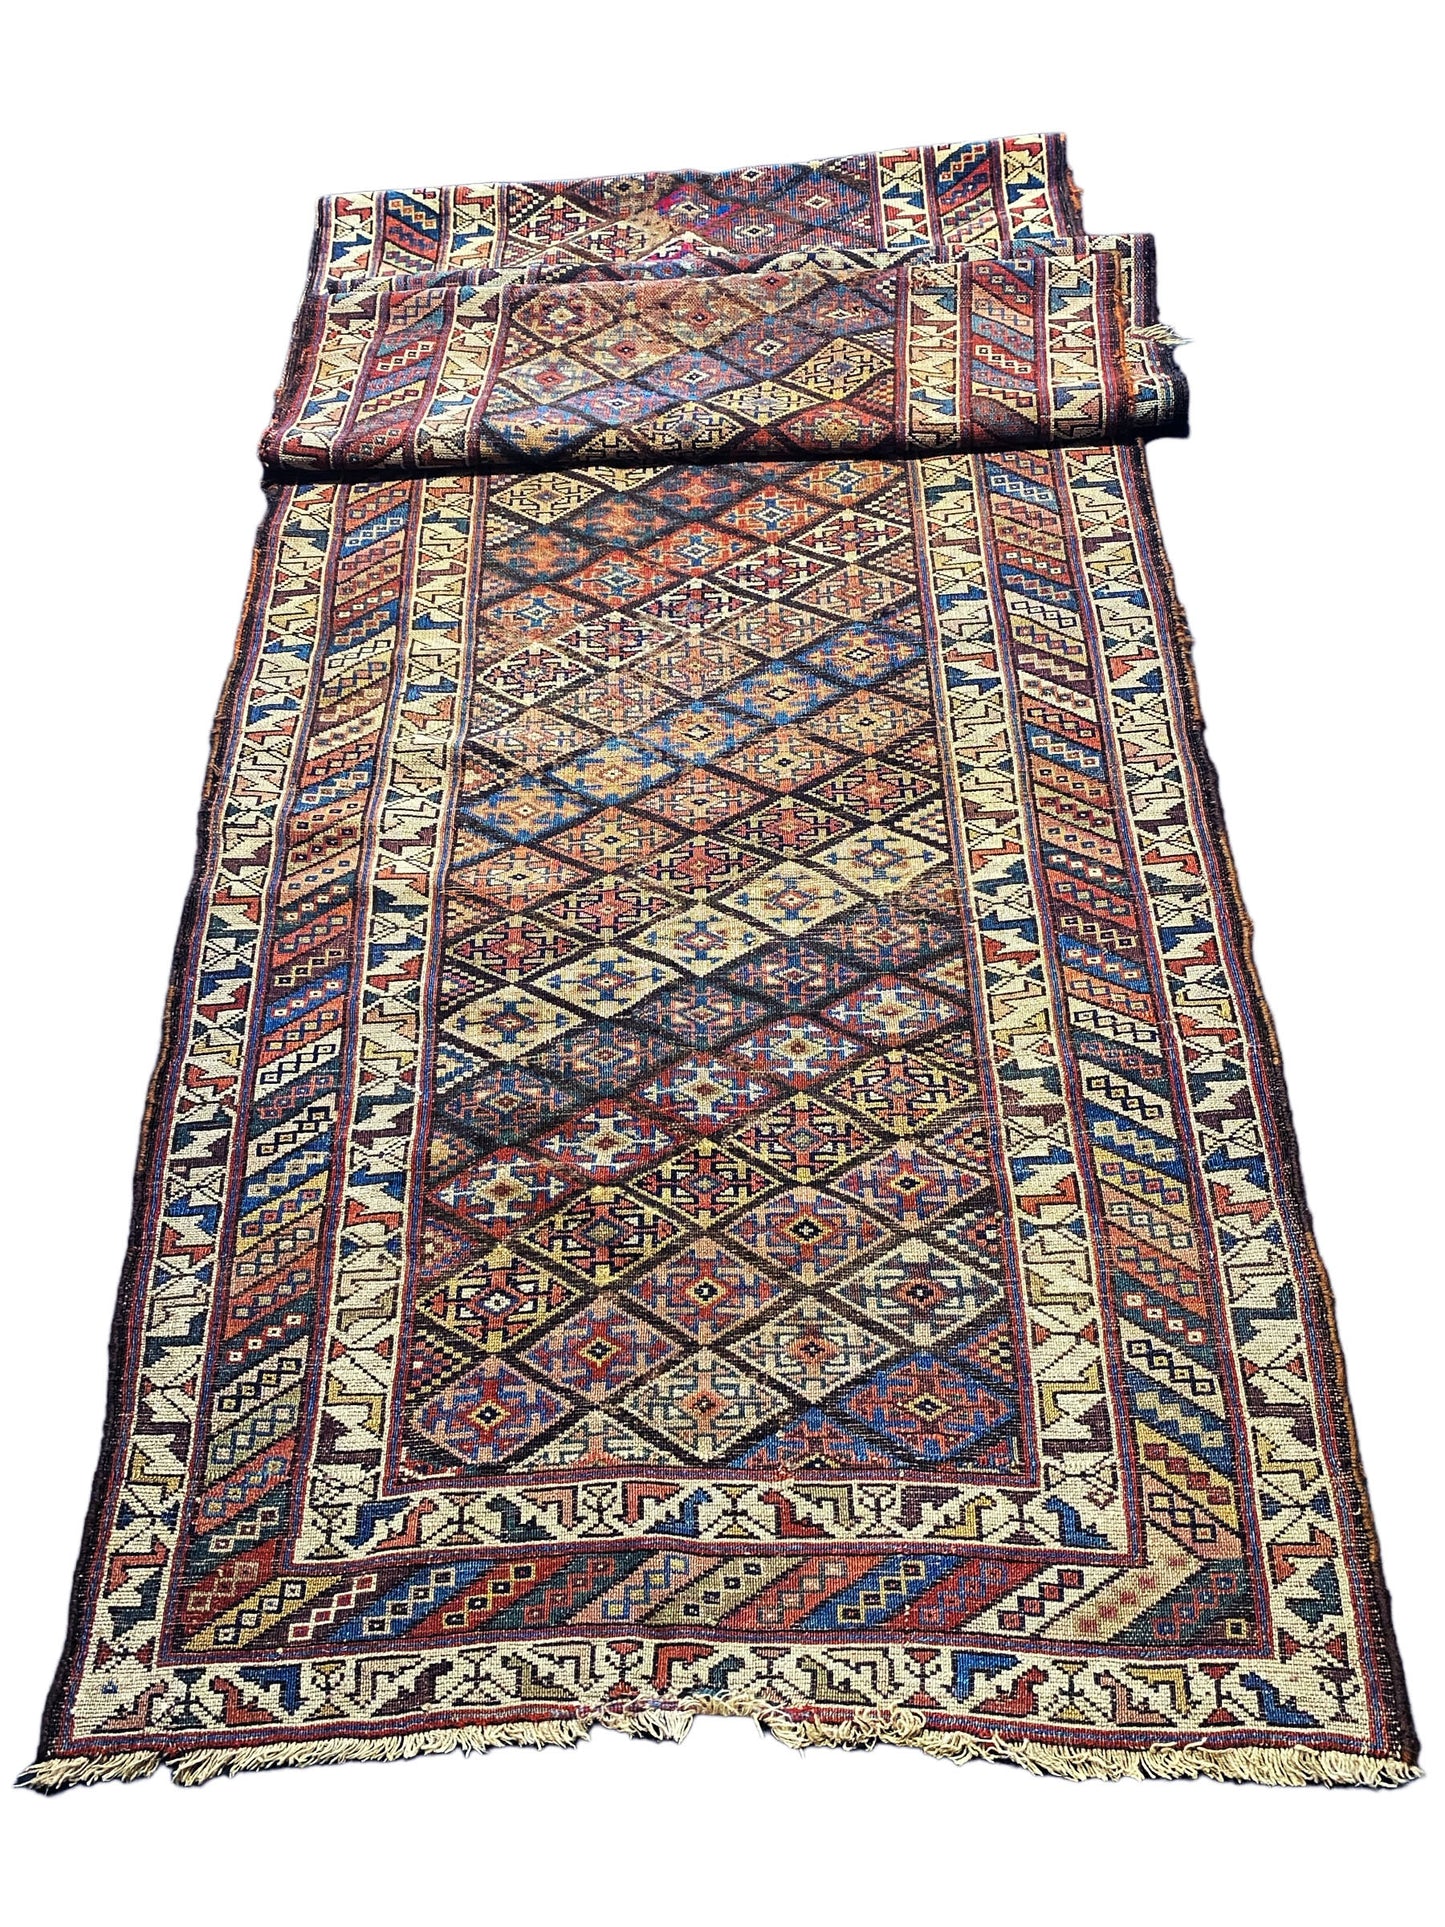 #5955 19th C Antique Caucasian  Kazak Wool Hand knotted Runner